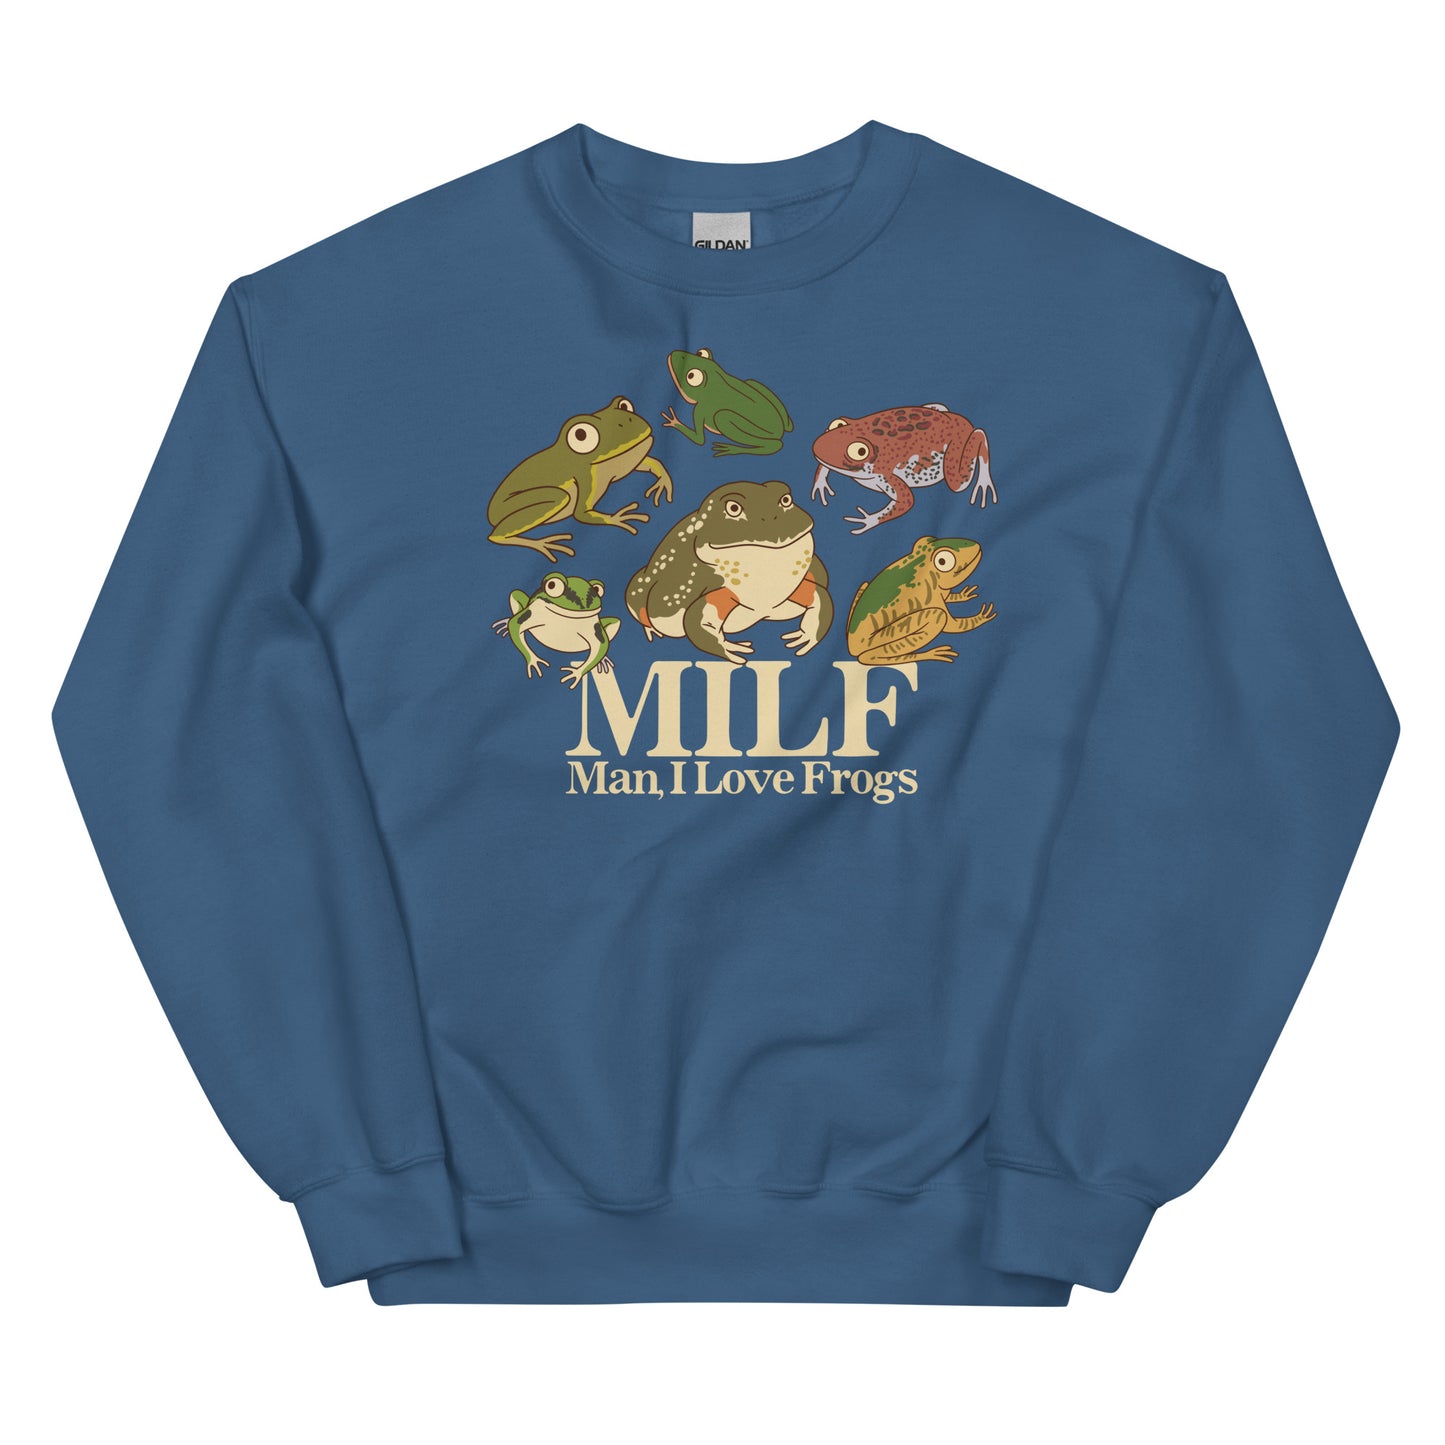 MILF (Man, I Love Frogs) Unisex Sweatshirt